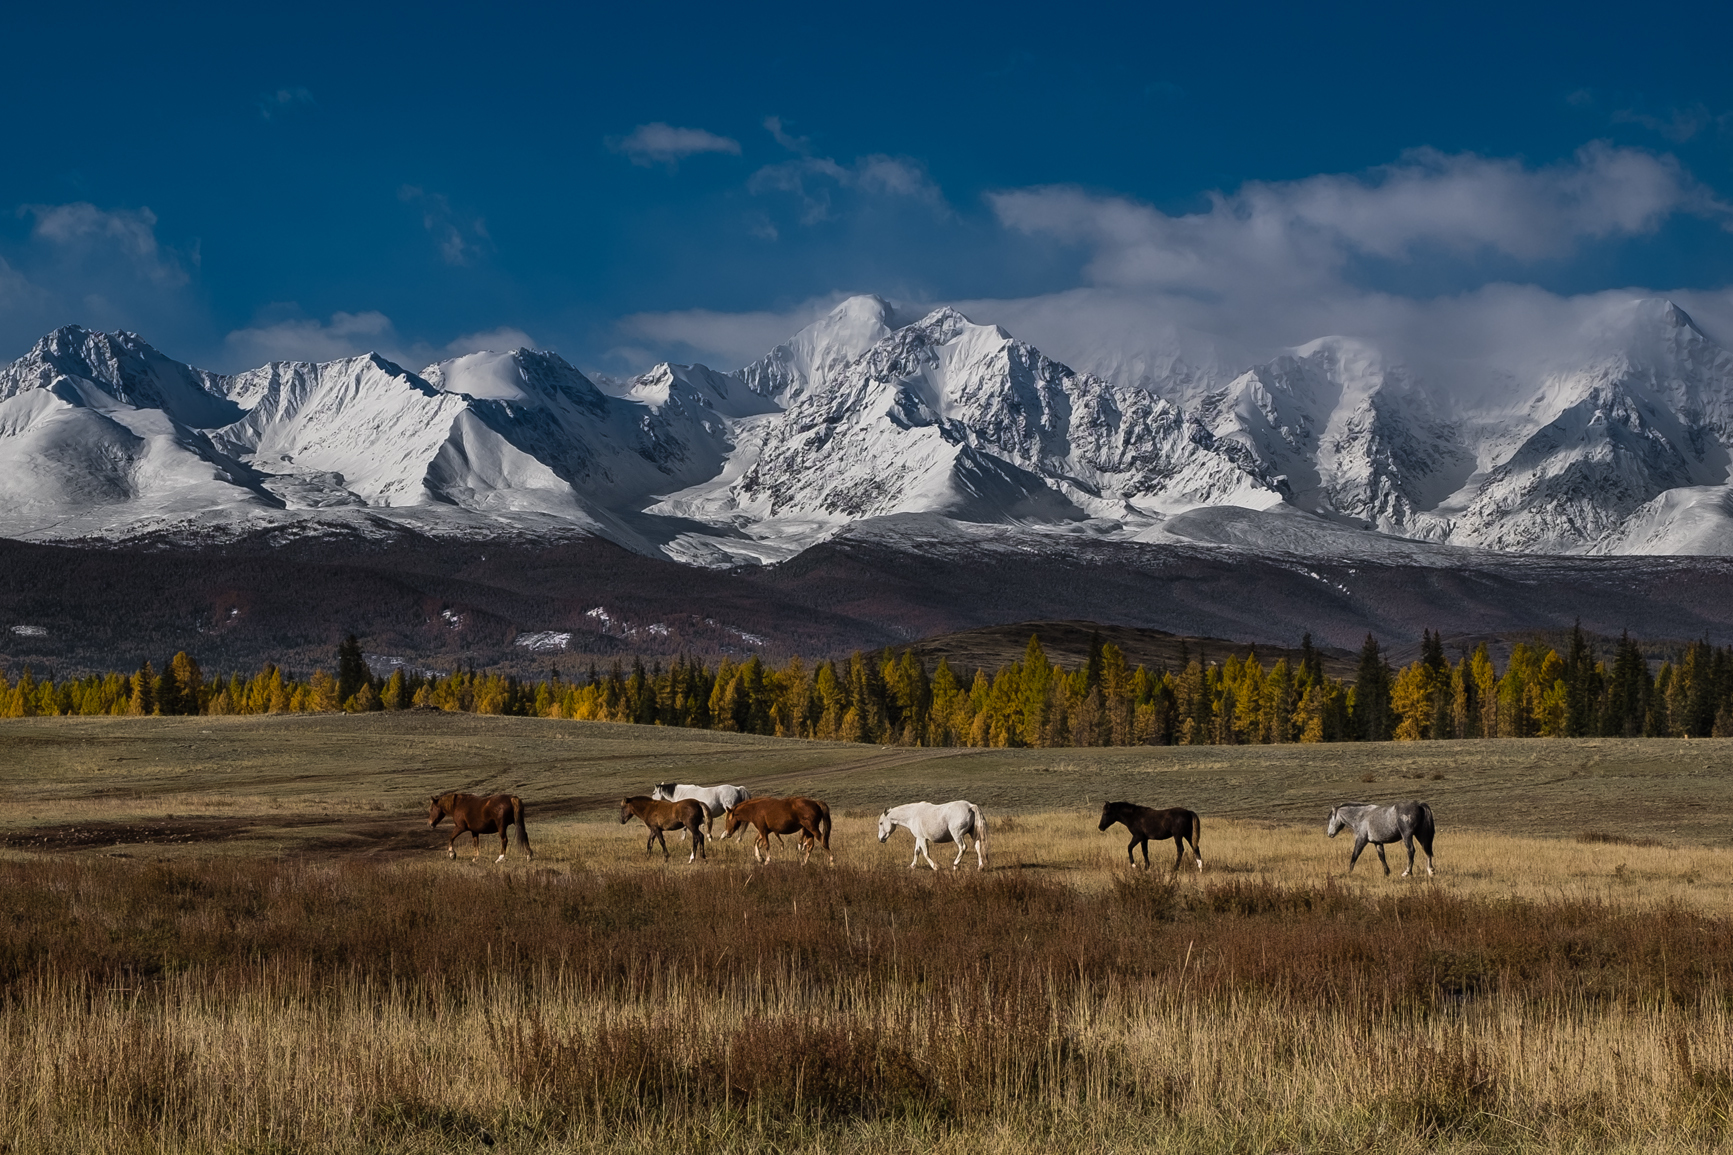 Kurai steppe - My, Landscape, The photo, The mountains, Altai Republic, Siberia, The nature of Russia, Nature, Autumn, Kurai steppe, Longpost